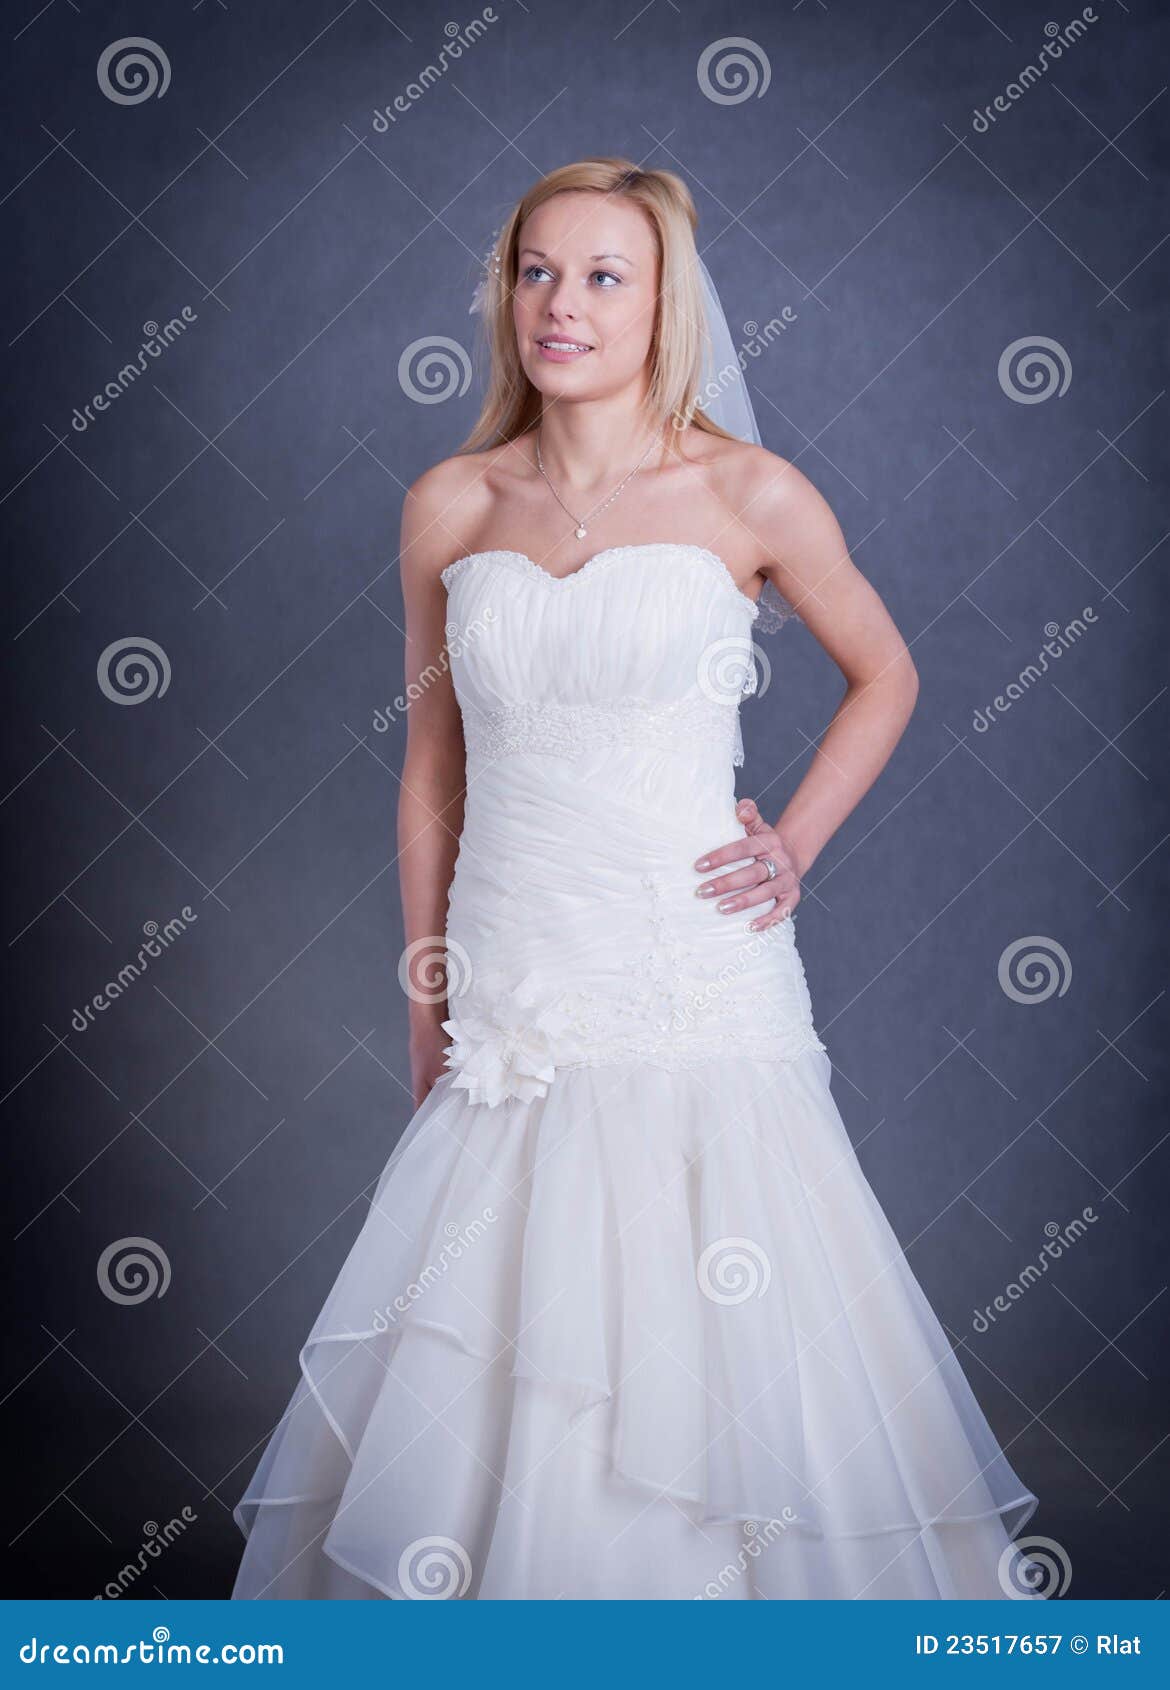 Beautiful girl in wedding dress on grey background - studio shot.